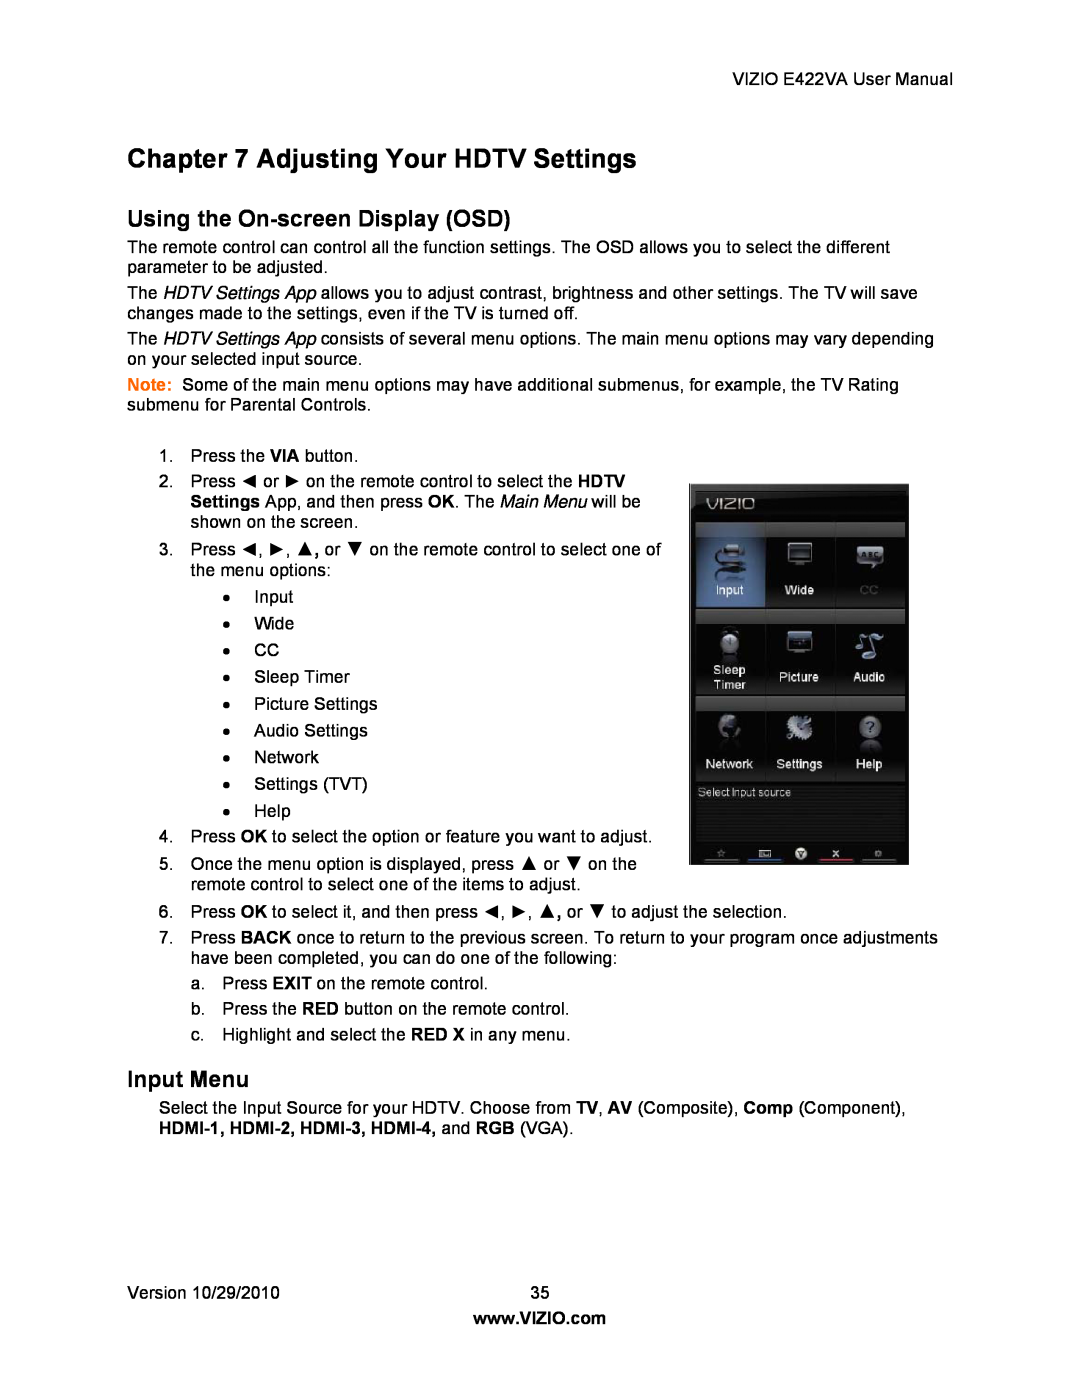 Xerox E422VA user manual Adjusting Your HDTV Settings, Using the On-screen Display OSD, Input Menu 